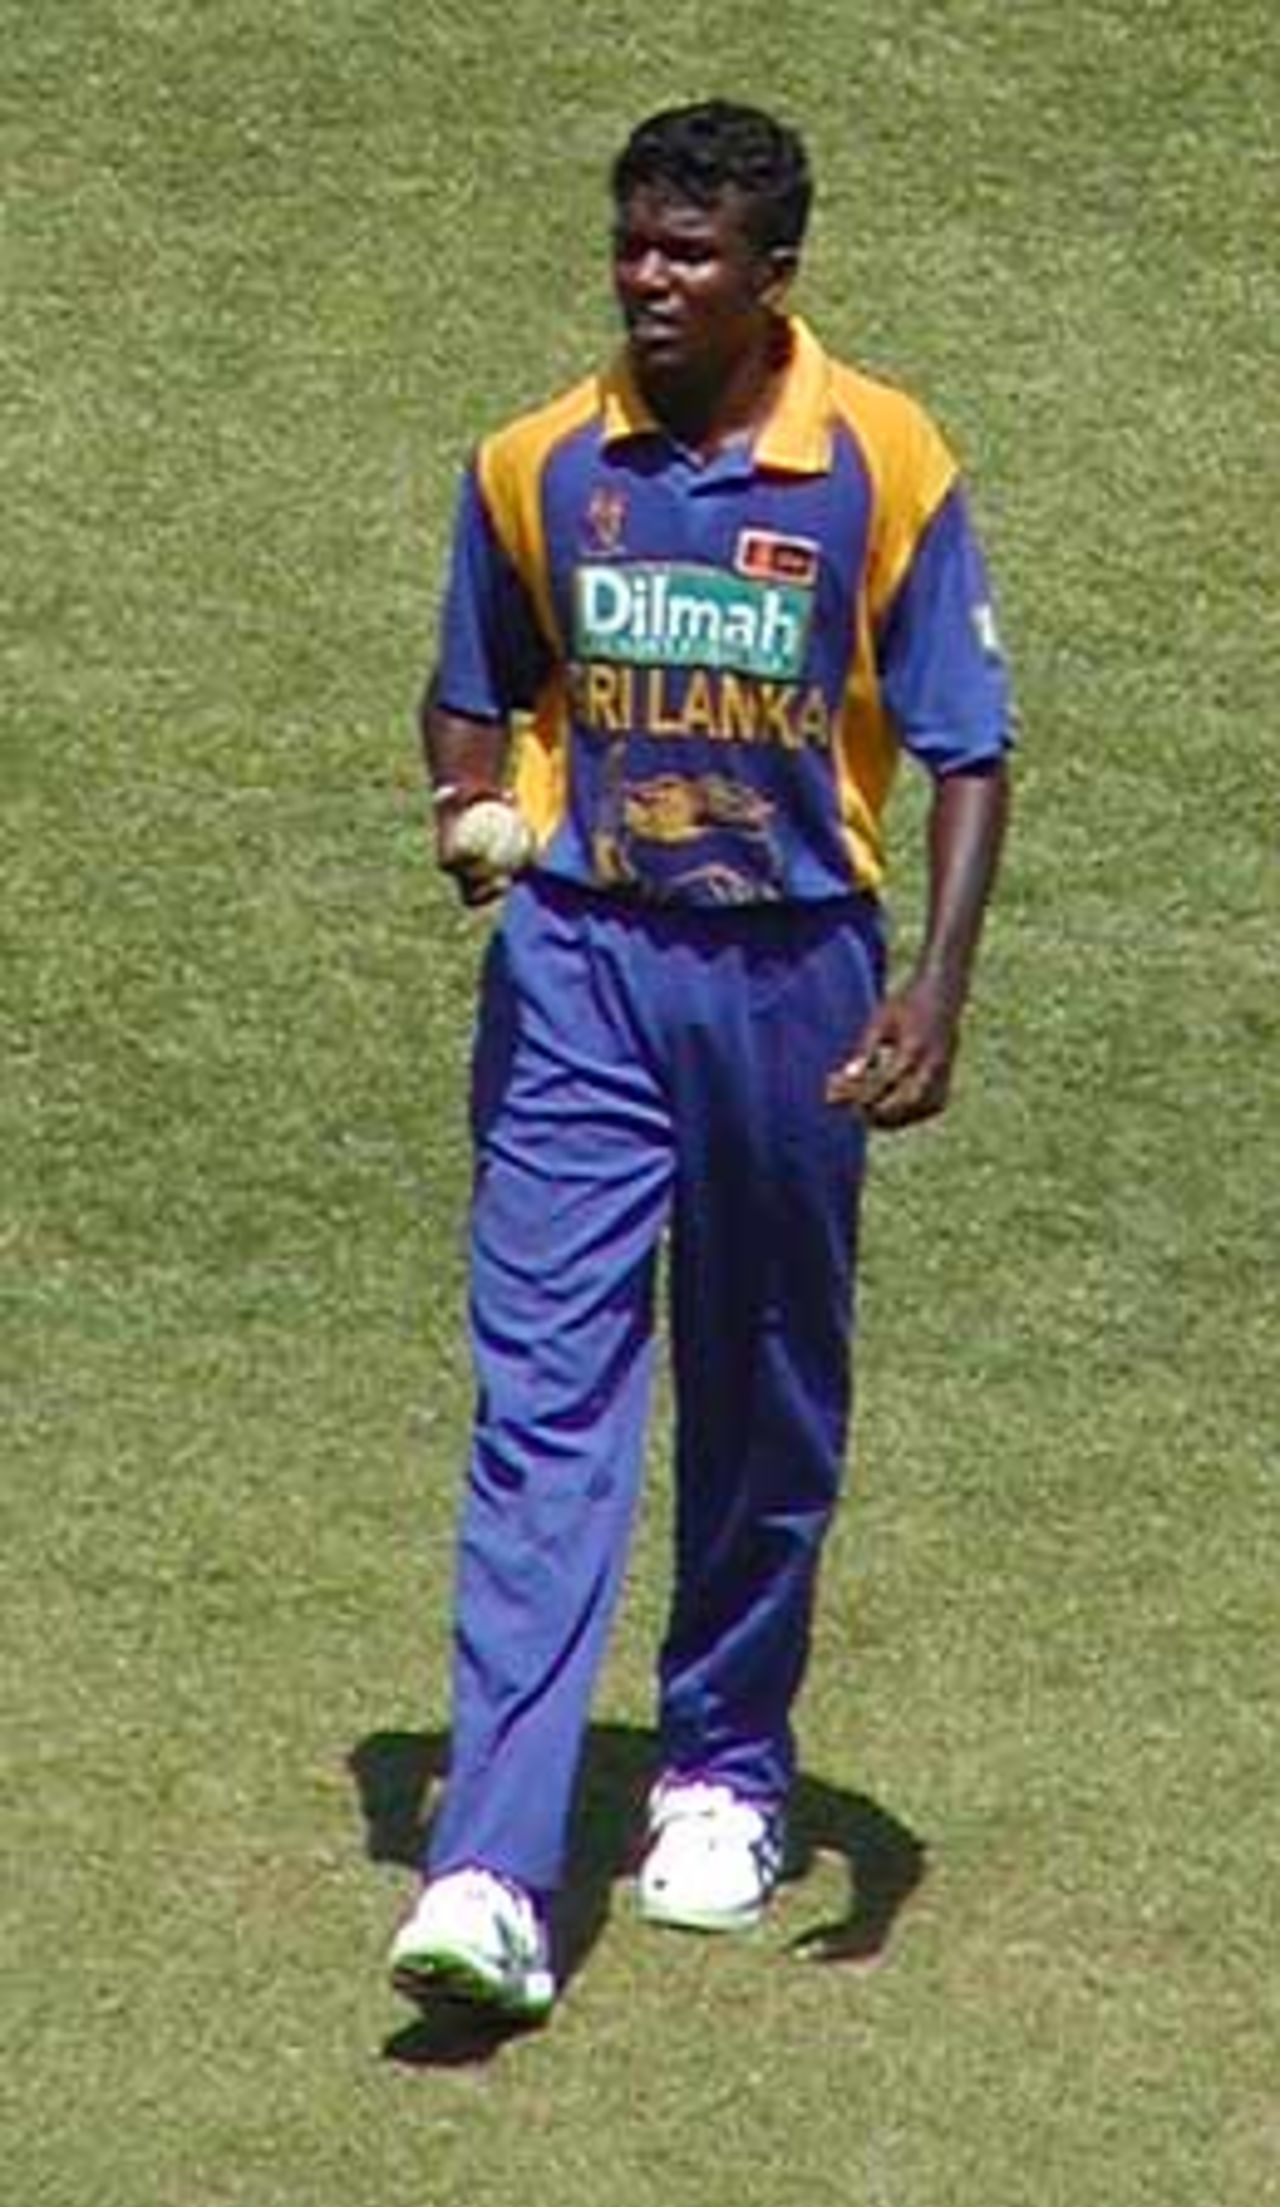 Hasantha Fernando walking back, Morocco Cup, 6th ODI at Tangiers, South Africa v Sri Lanka, 19 Aug 2002